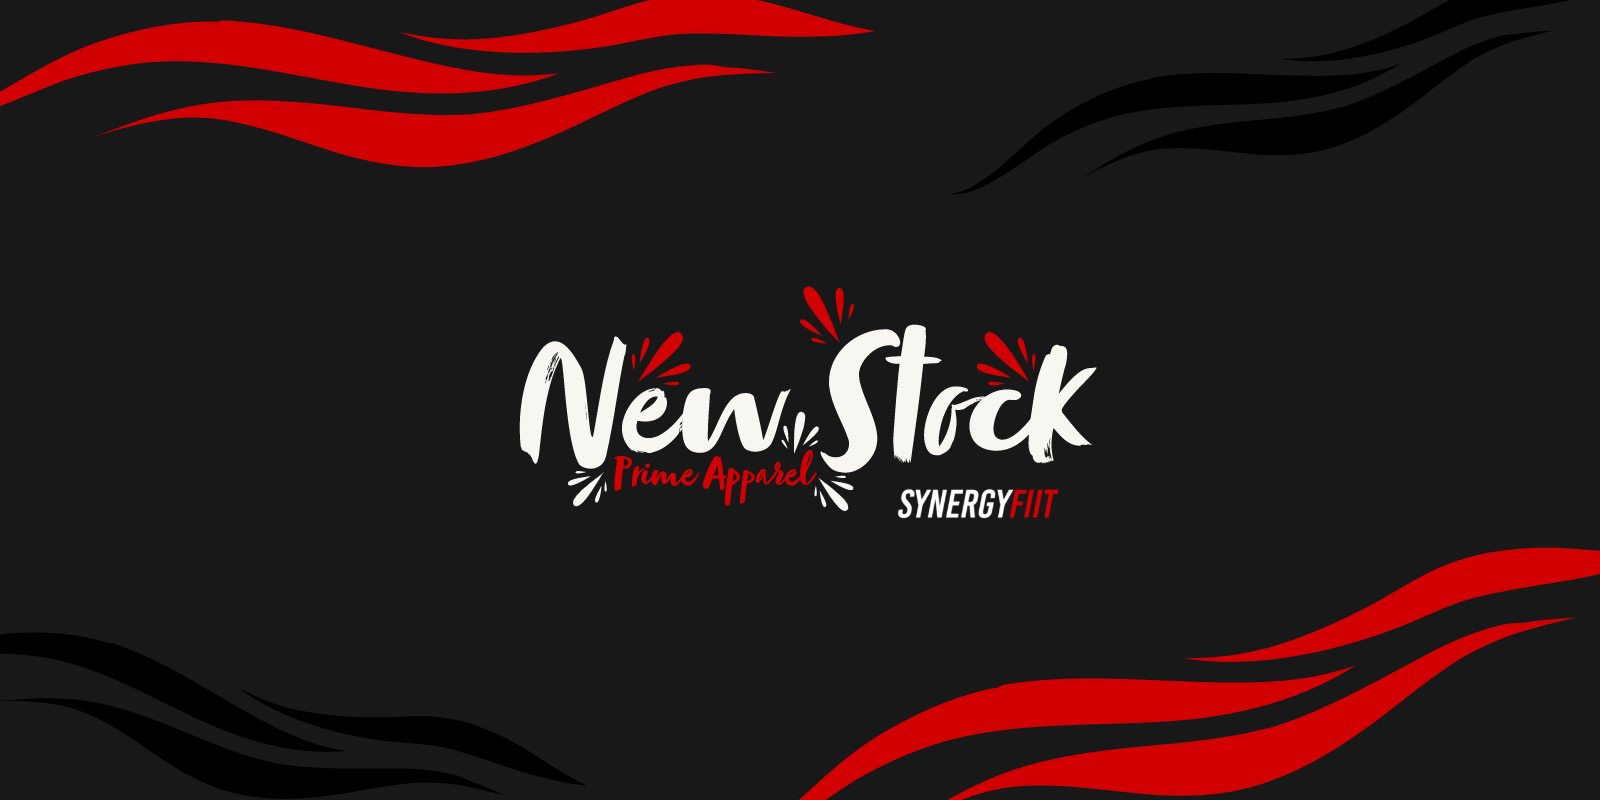 SynergyFiit New Stock